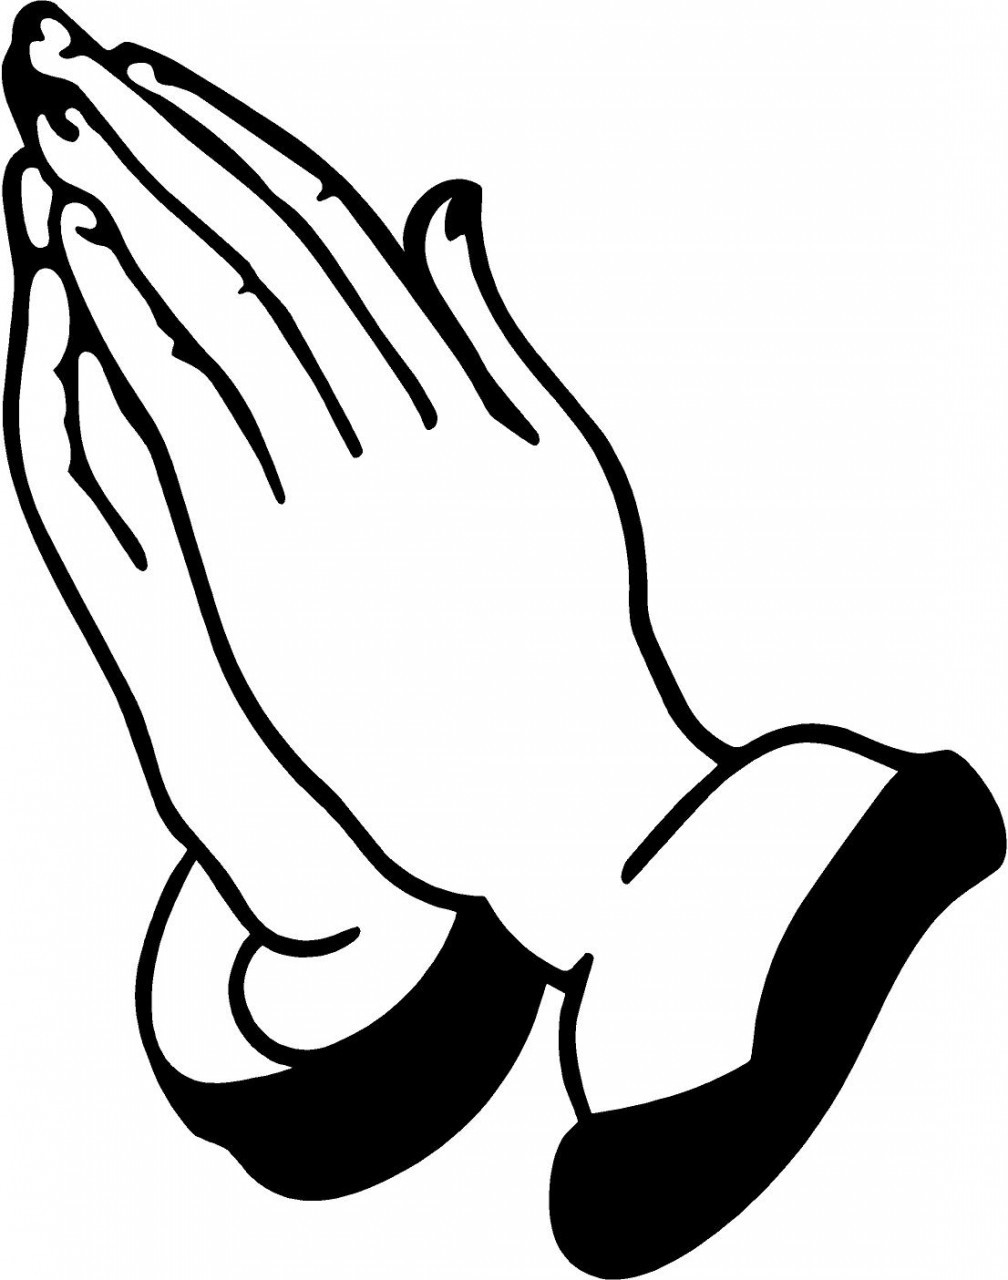 National Day of Prayer Clip Art | HickoryRecord